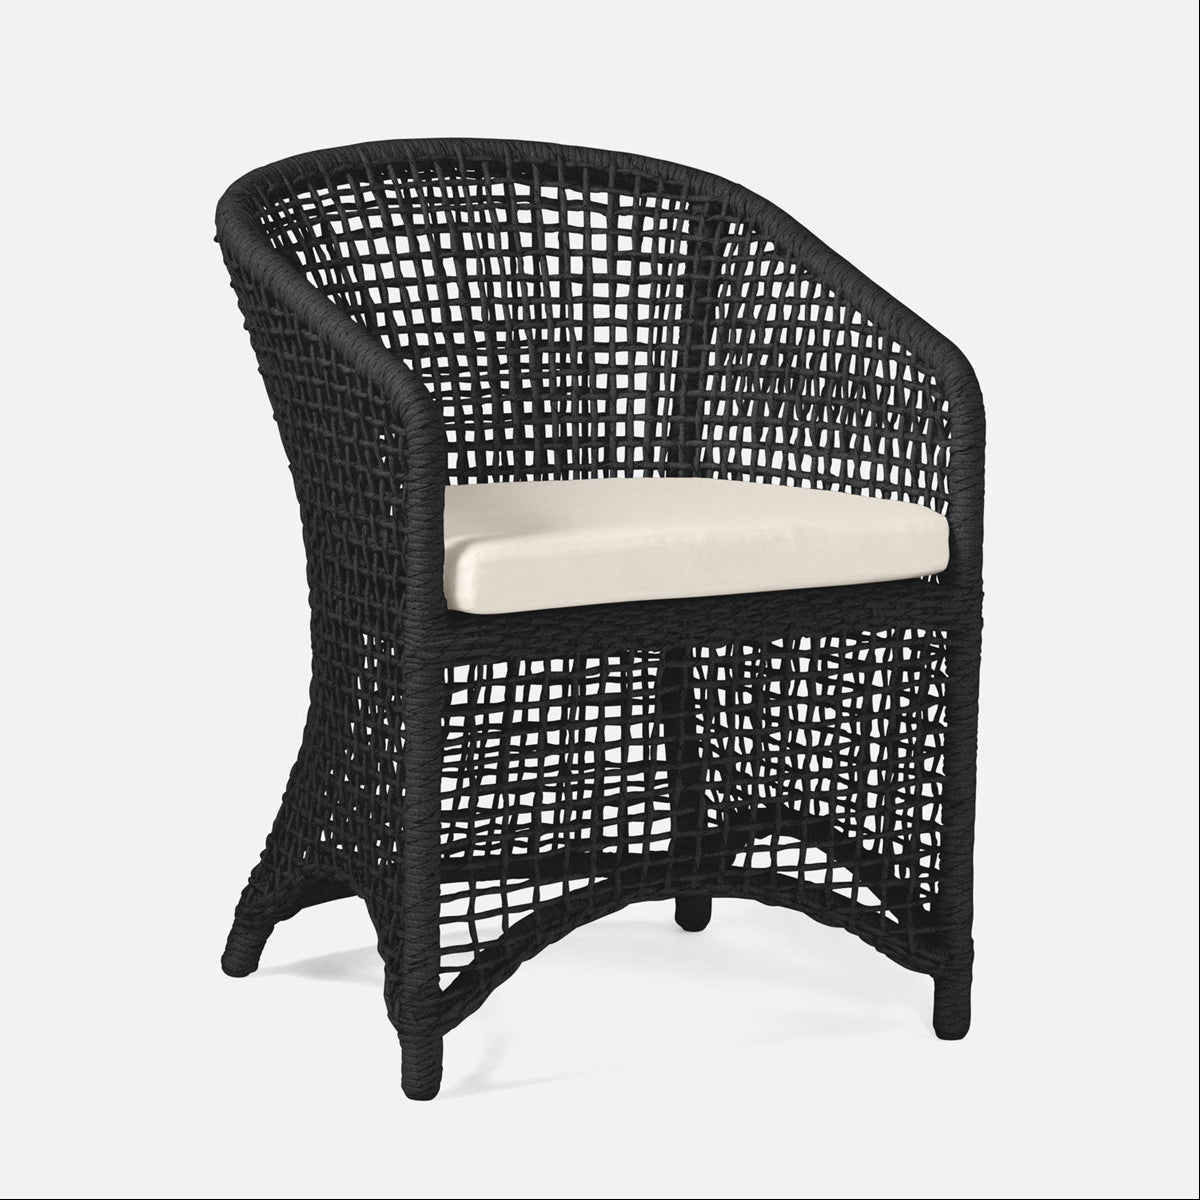 Made Goods Helena Open-Weave Barrel Outdoor Dining Chair in Weser